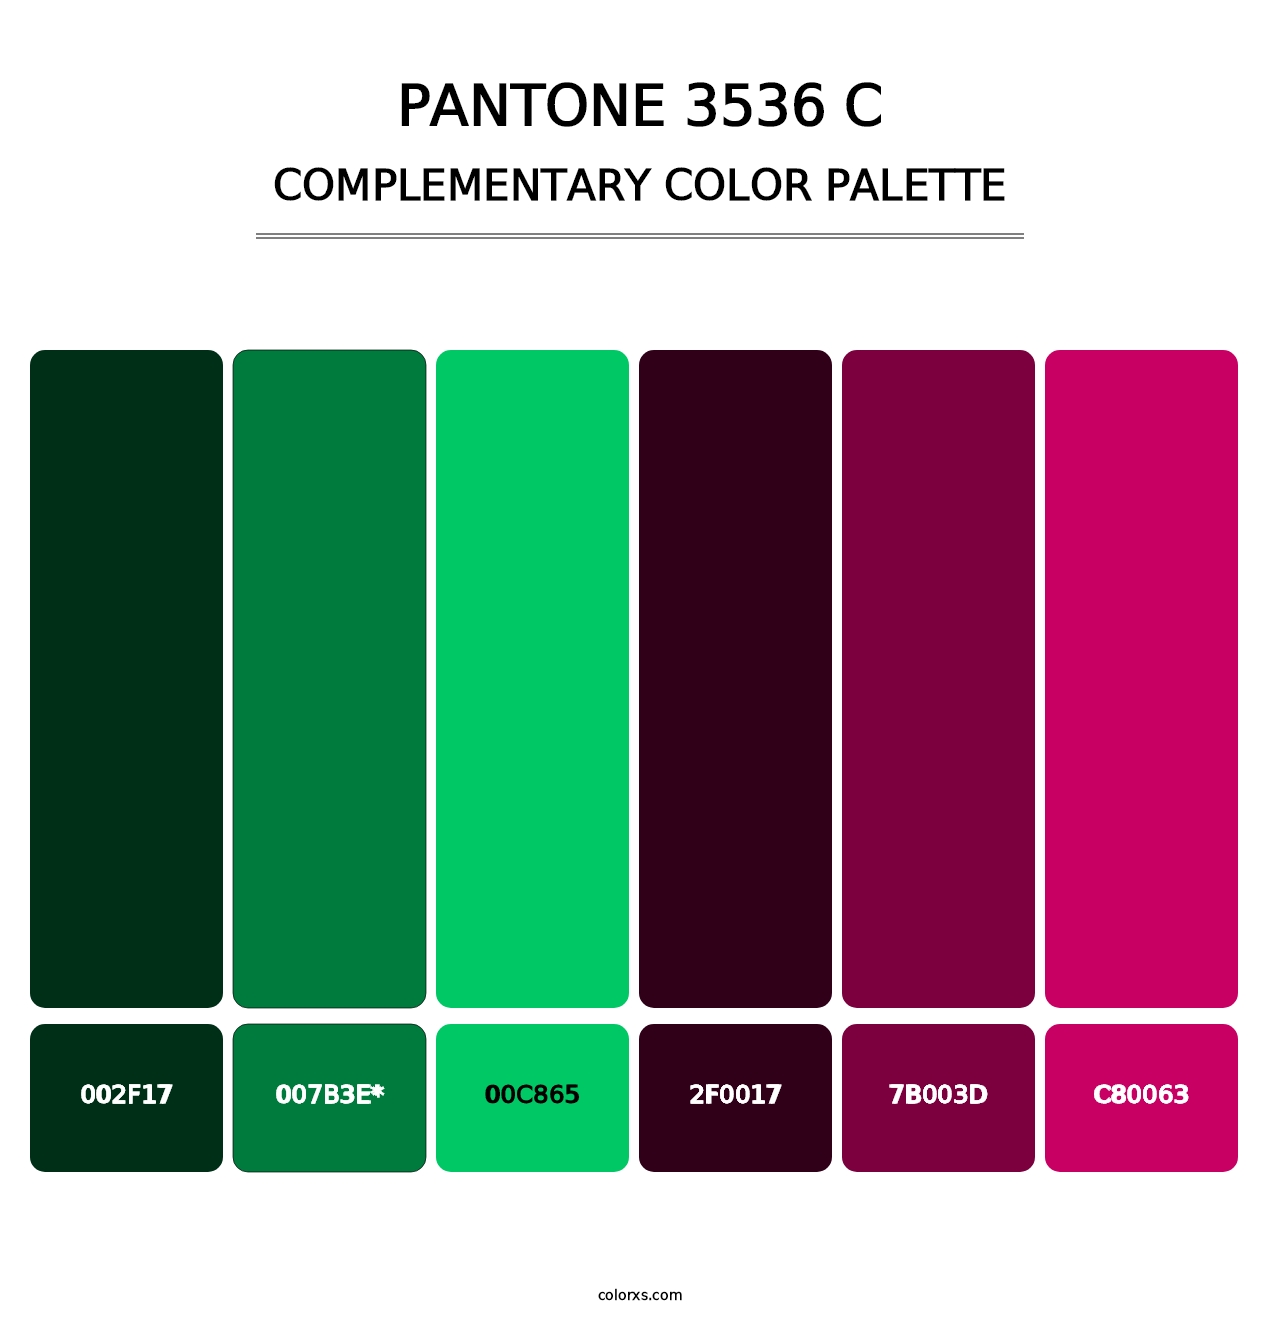 PANTONE 3536 C - Complementary Color Palette